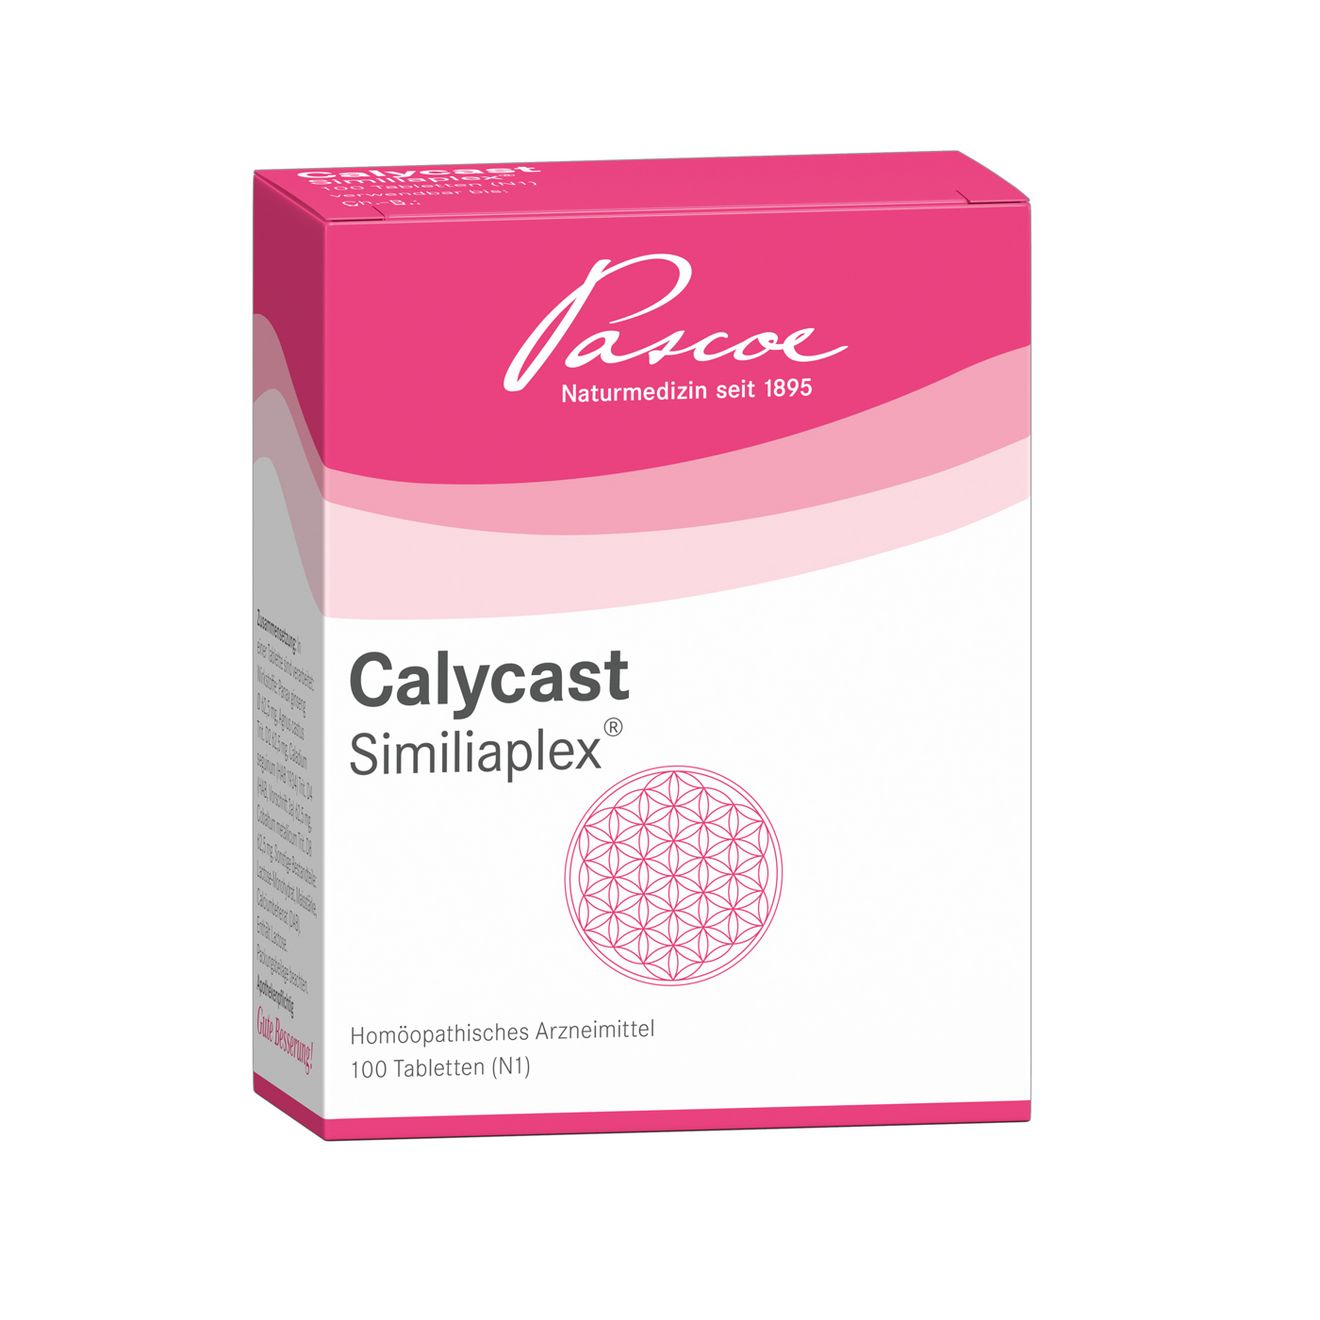 Calycast Similiaplex 100 Packshot PZN 01358436